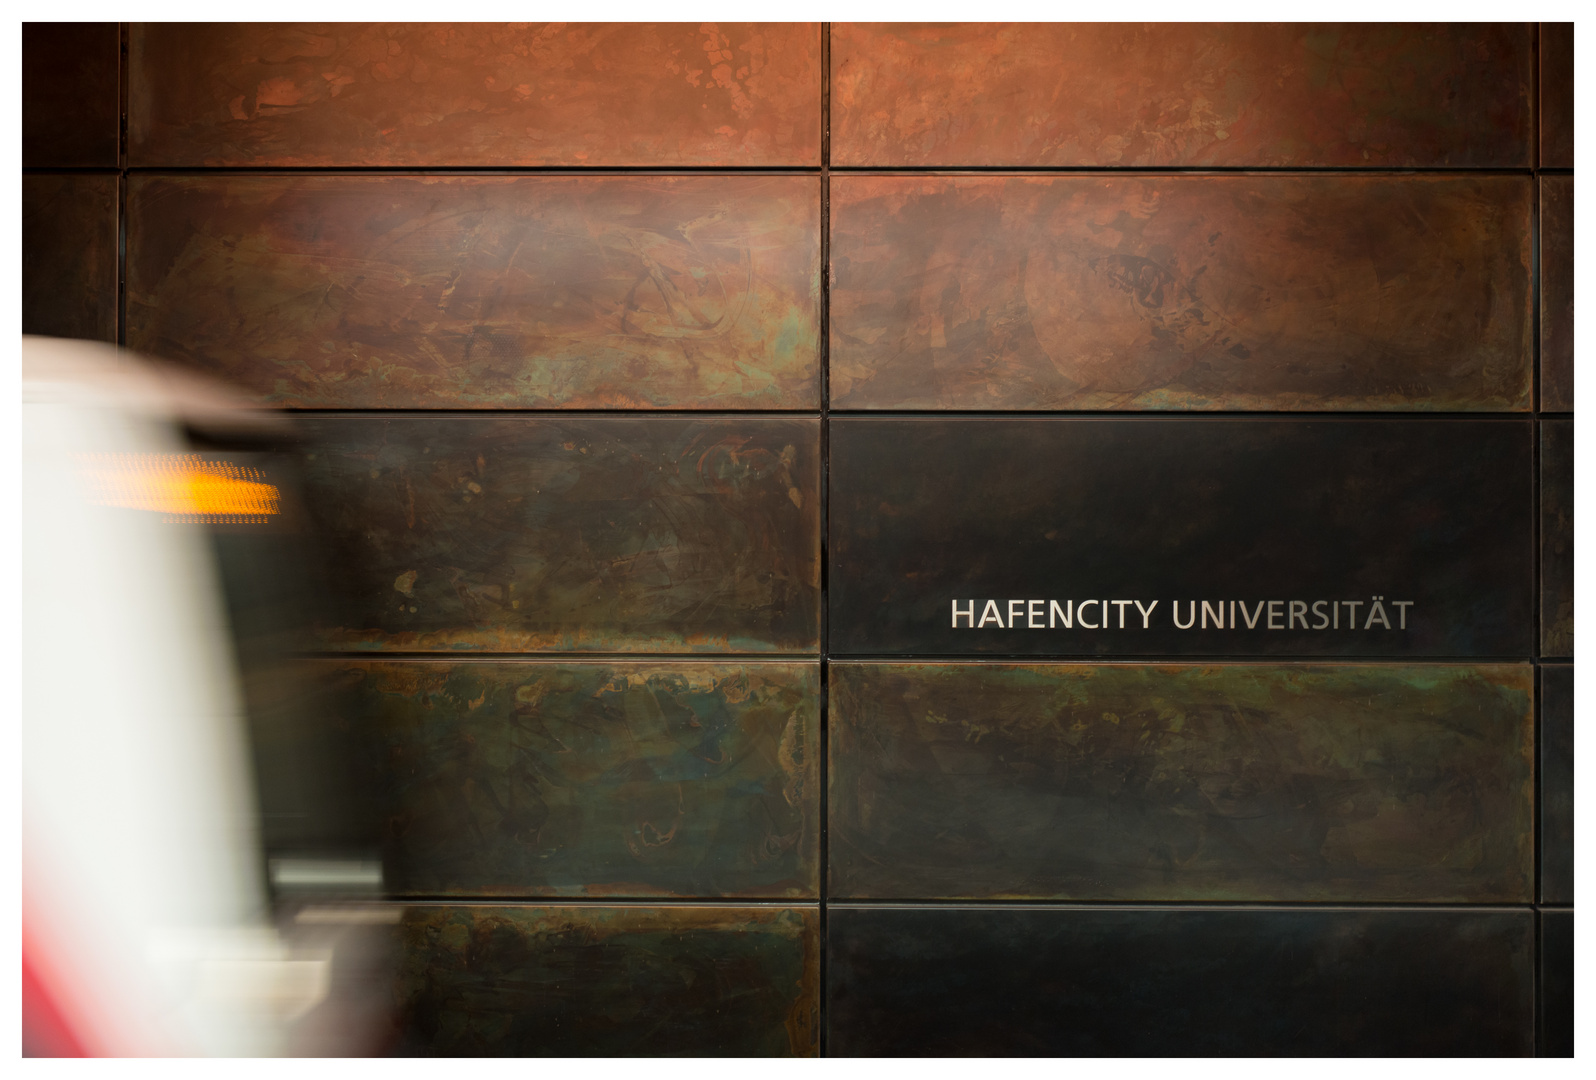 Hafencity Universität